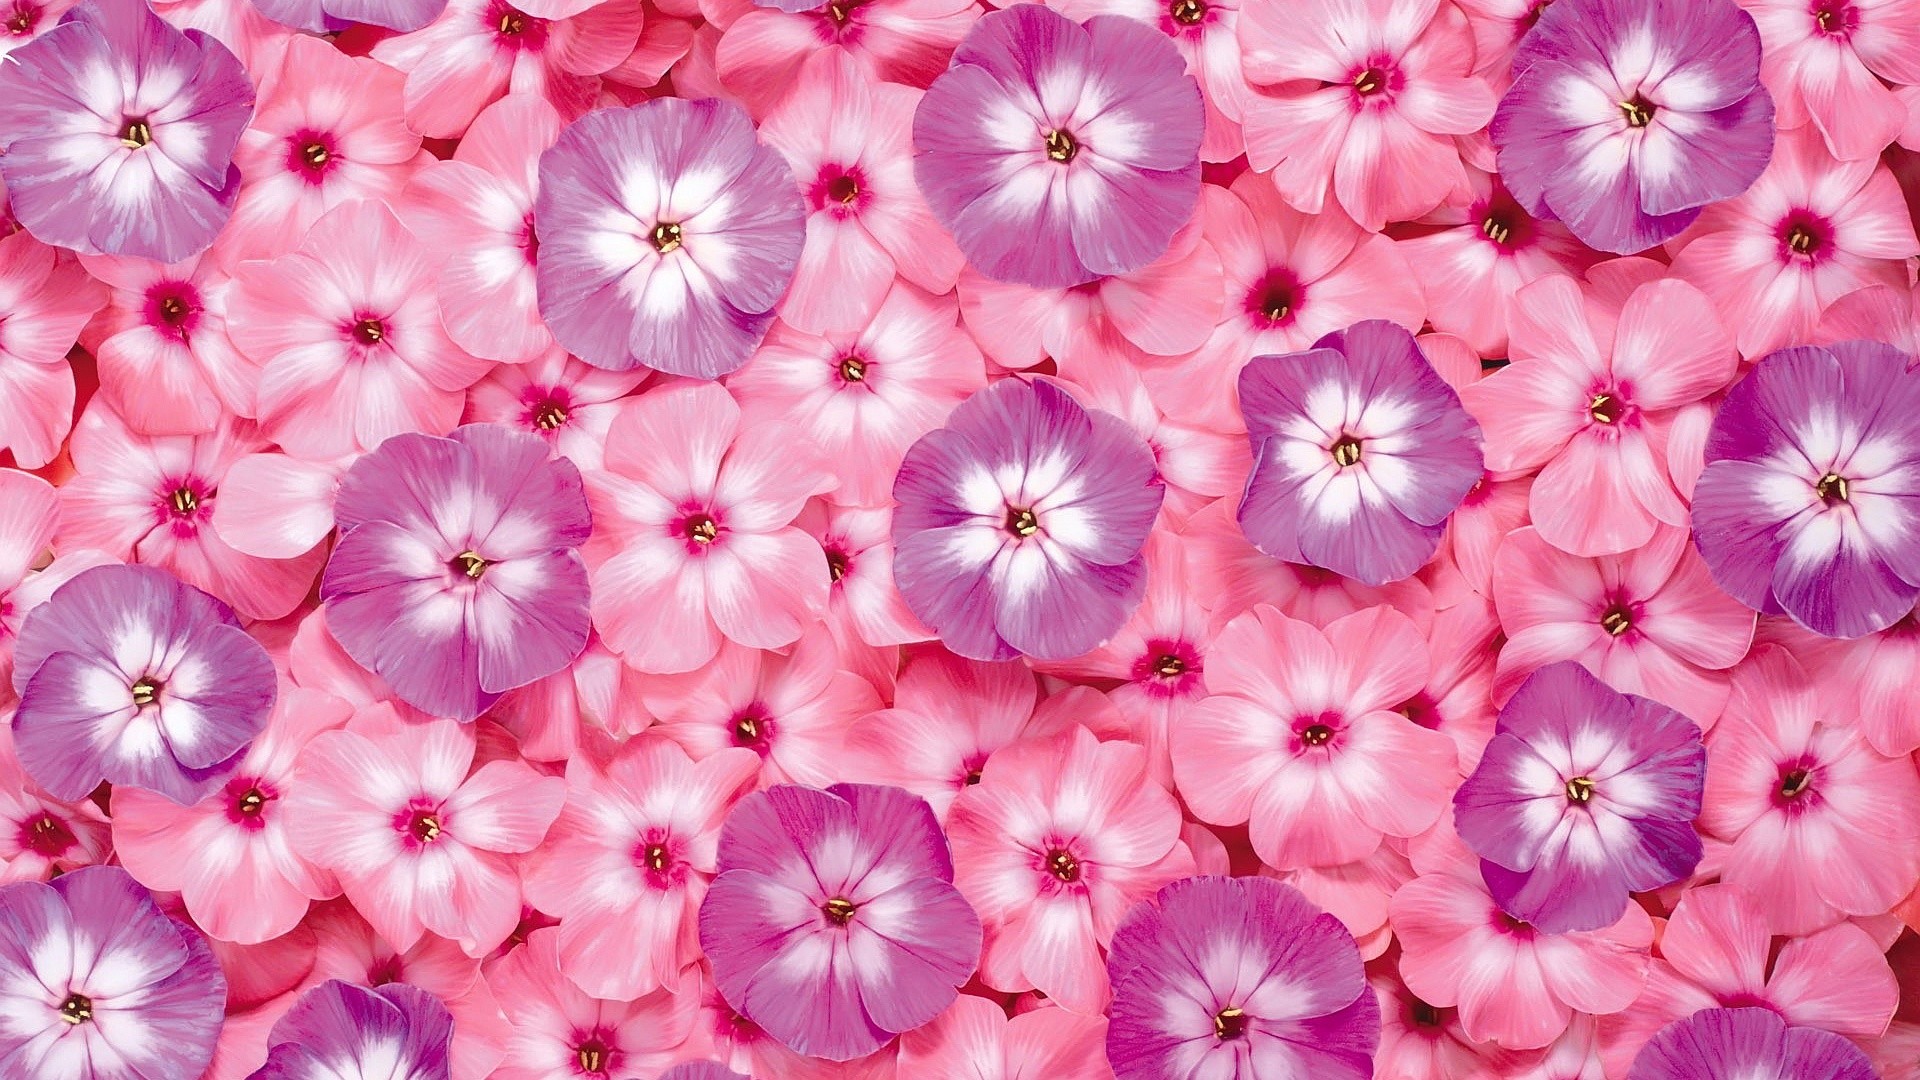 1920x1080 Pink Flower Desktop Wallpaper - WallpaperSafari ...